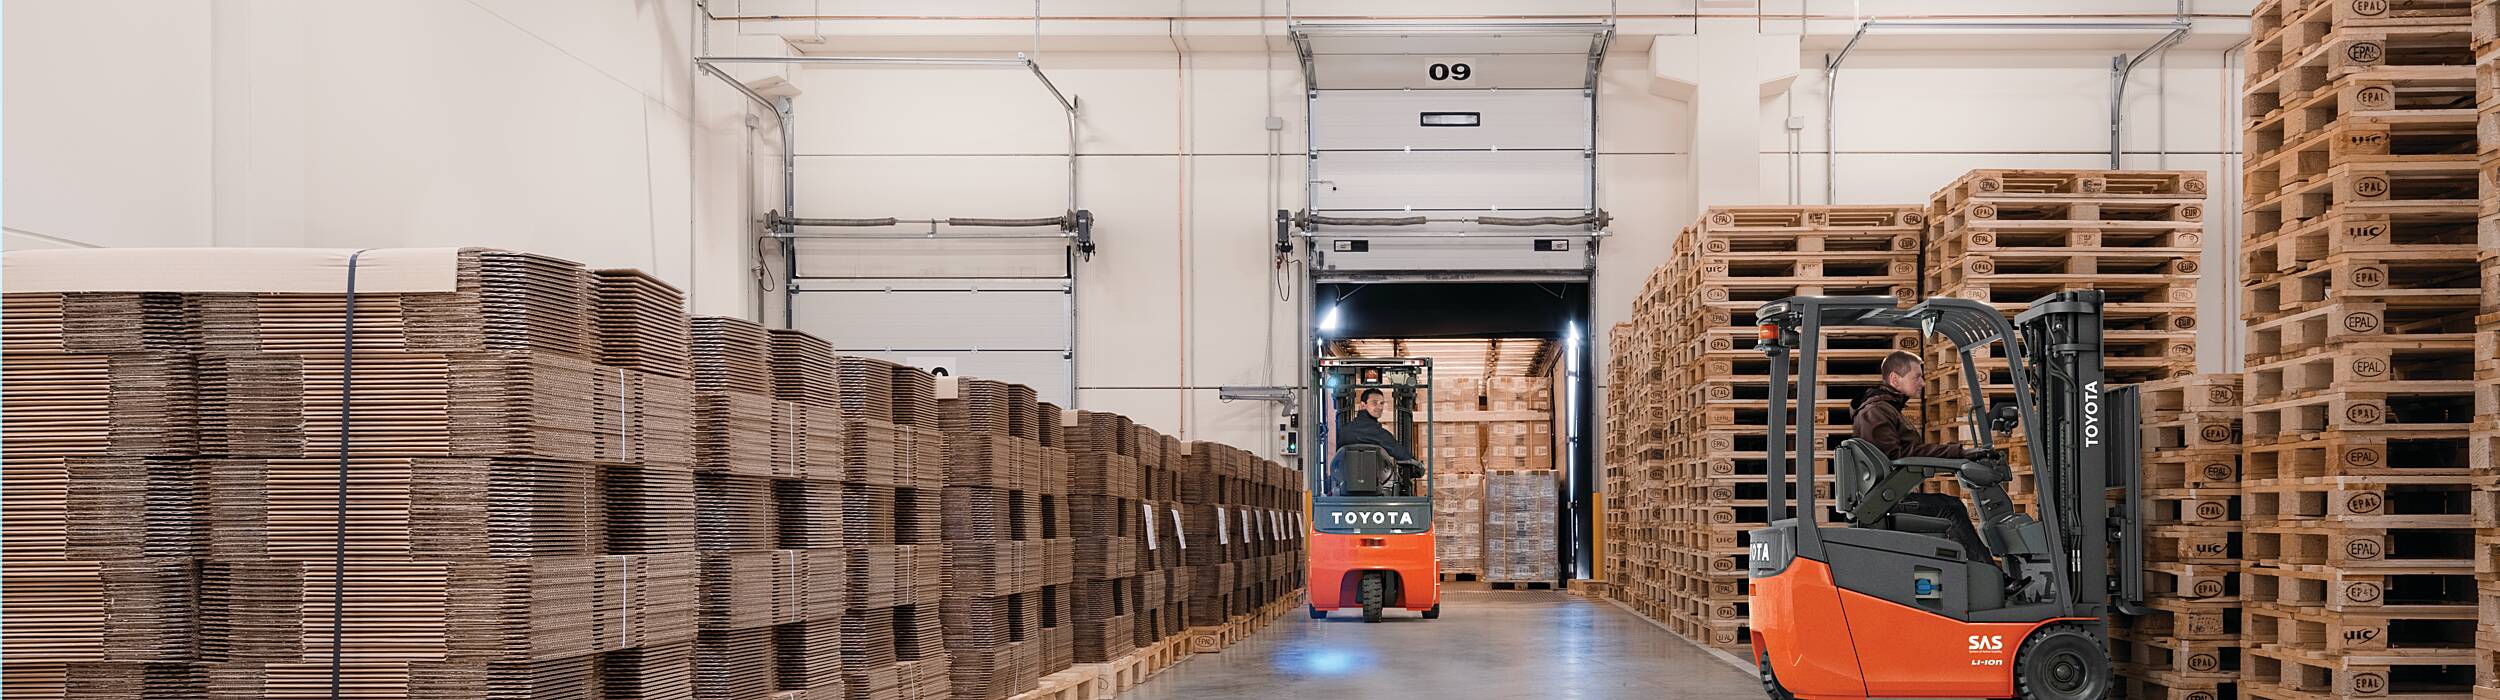 toyota traigo24 lifting pallets in warehouse